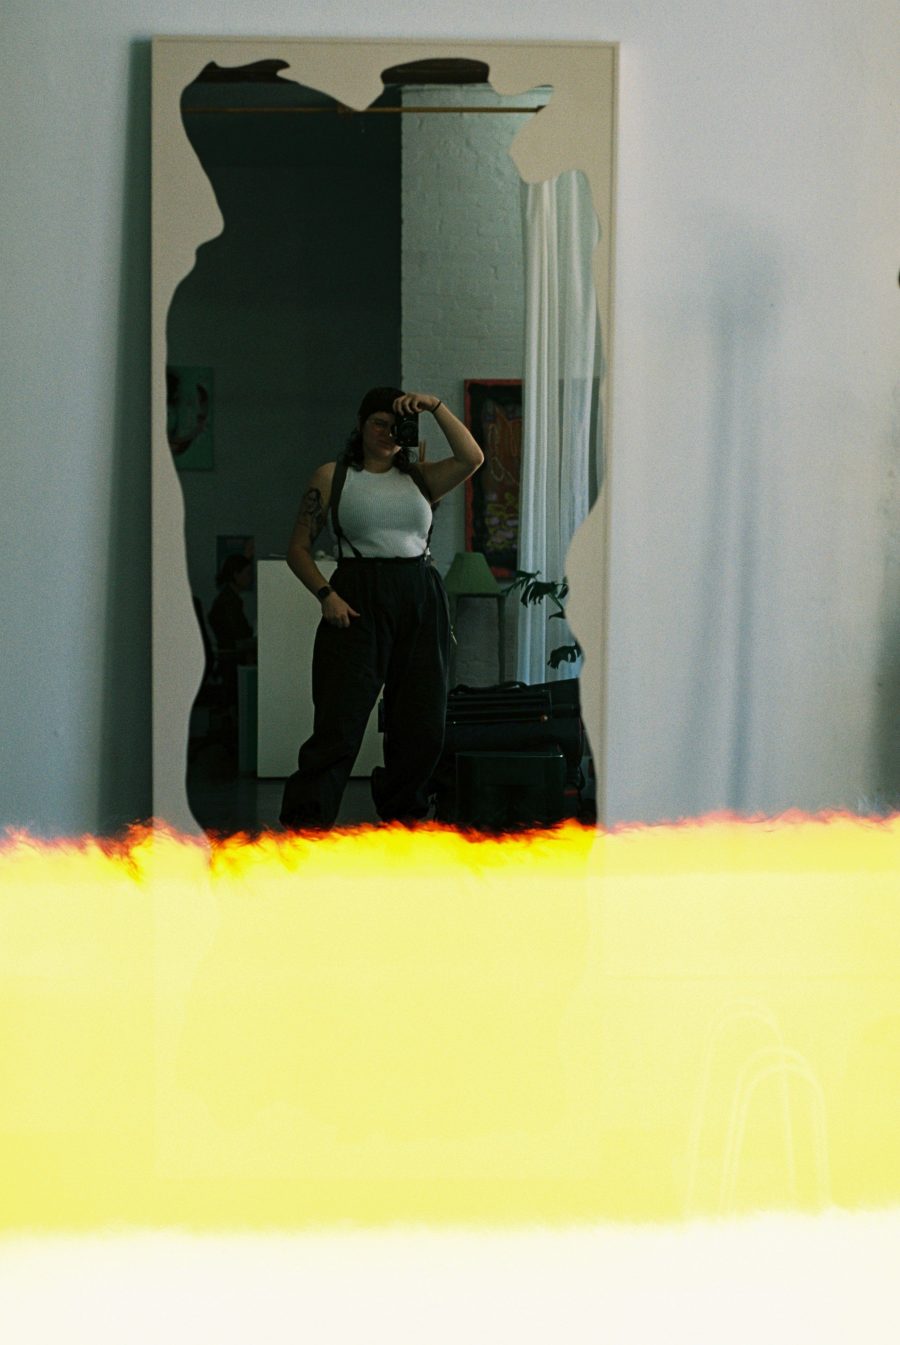 Jacinta Oaten taking a mirror selfie with their camera.